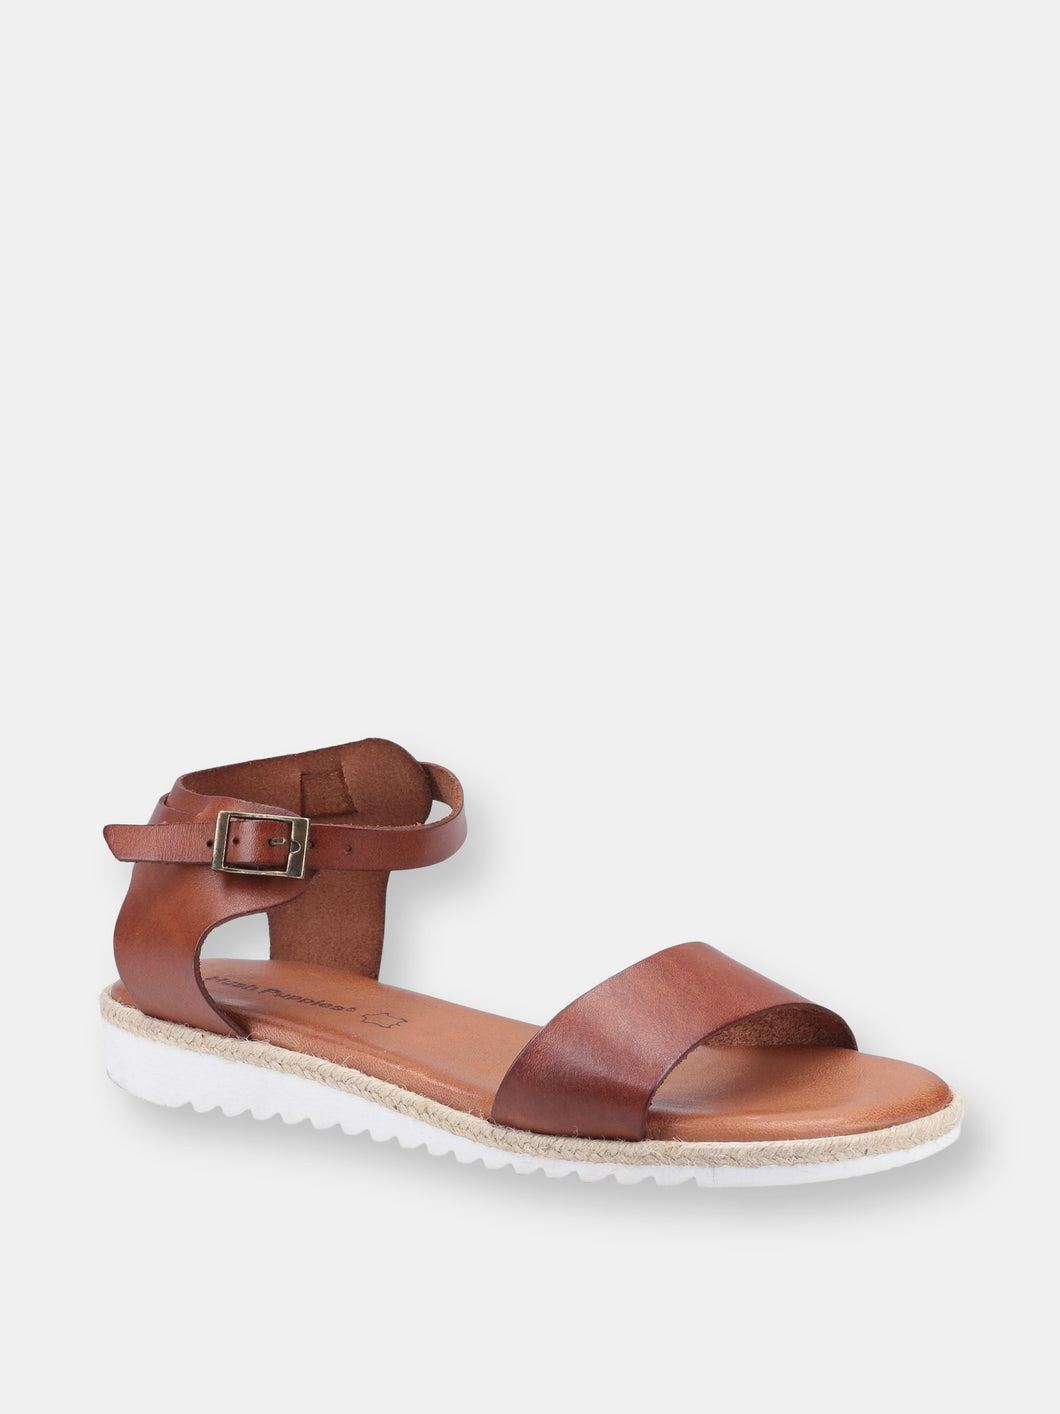 Womens/Ladies Gina Leather Flat Sandals - Tan